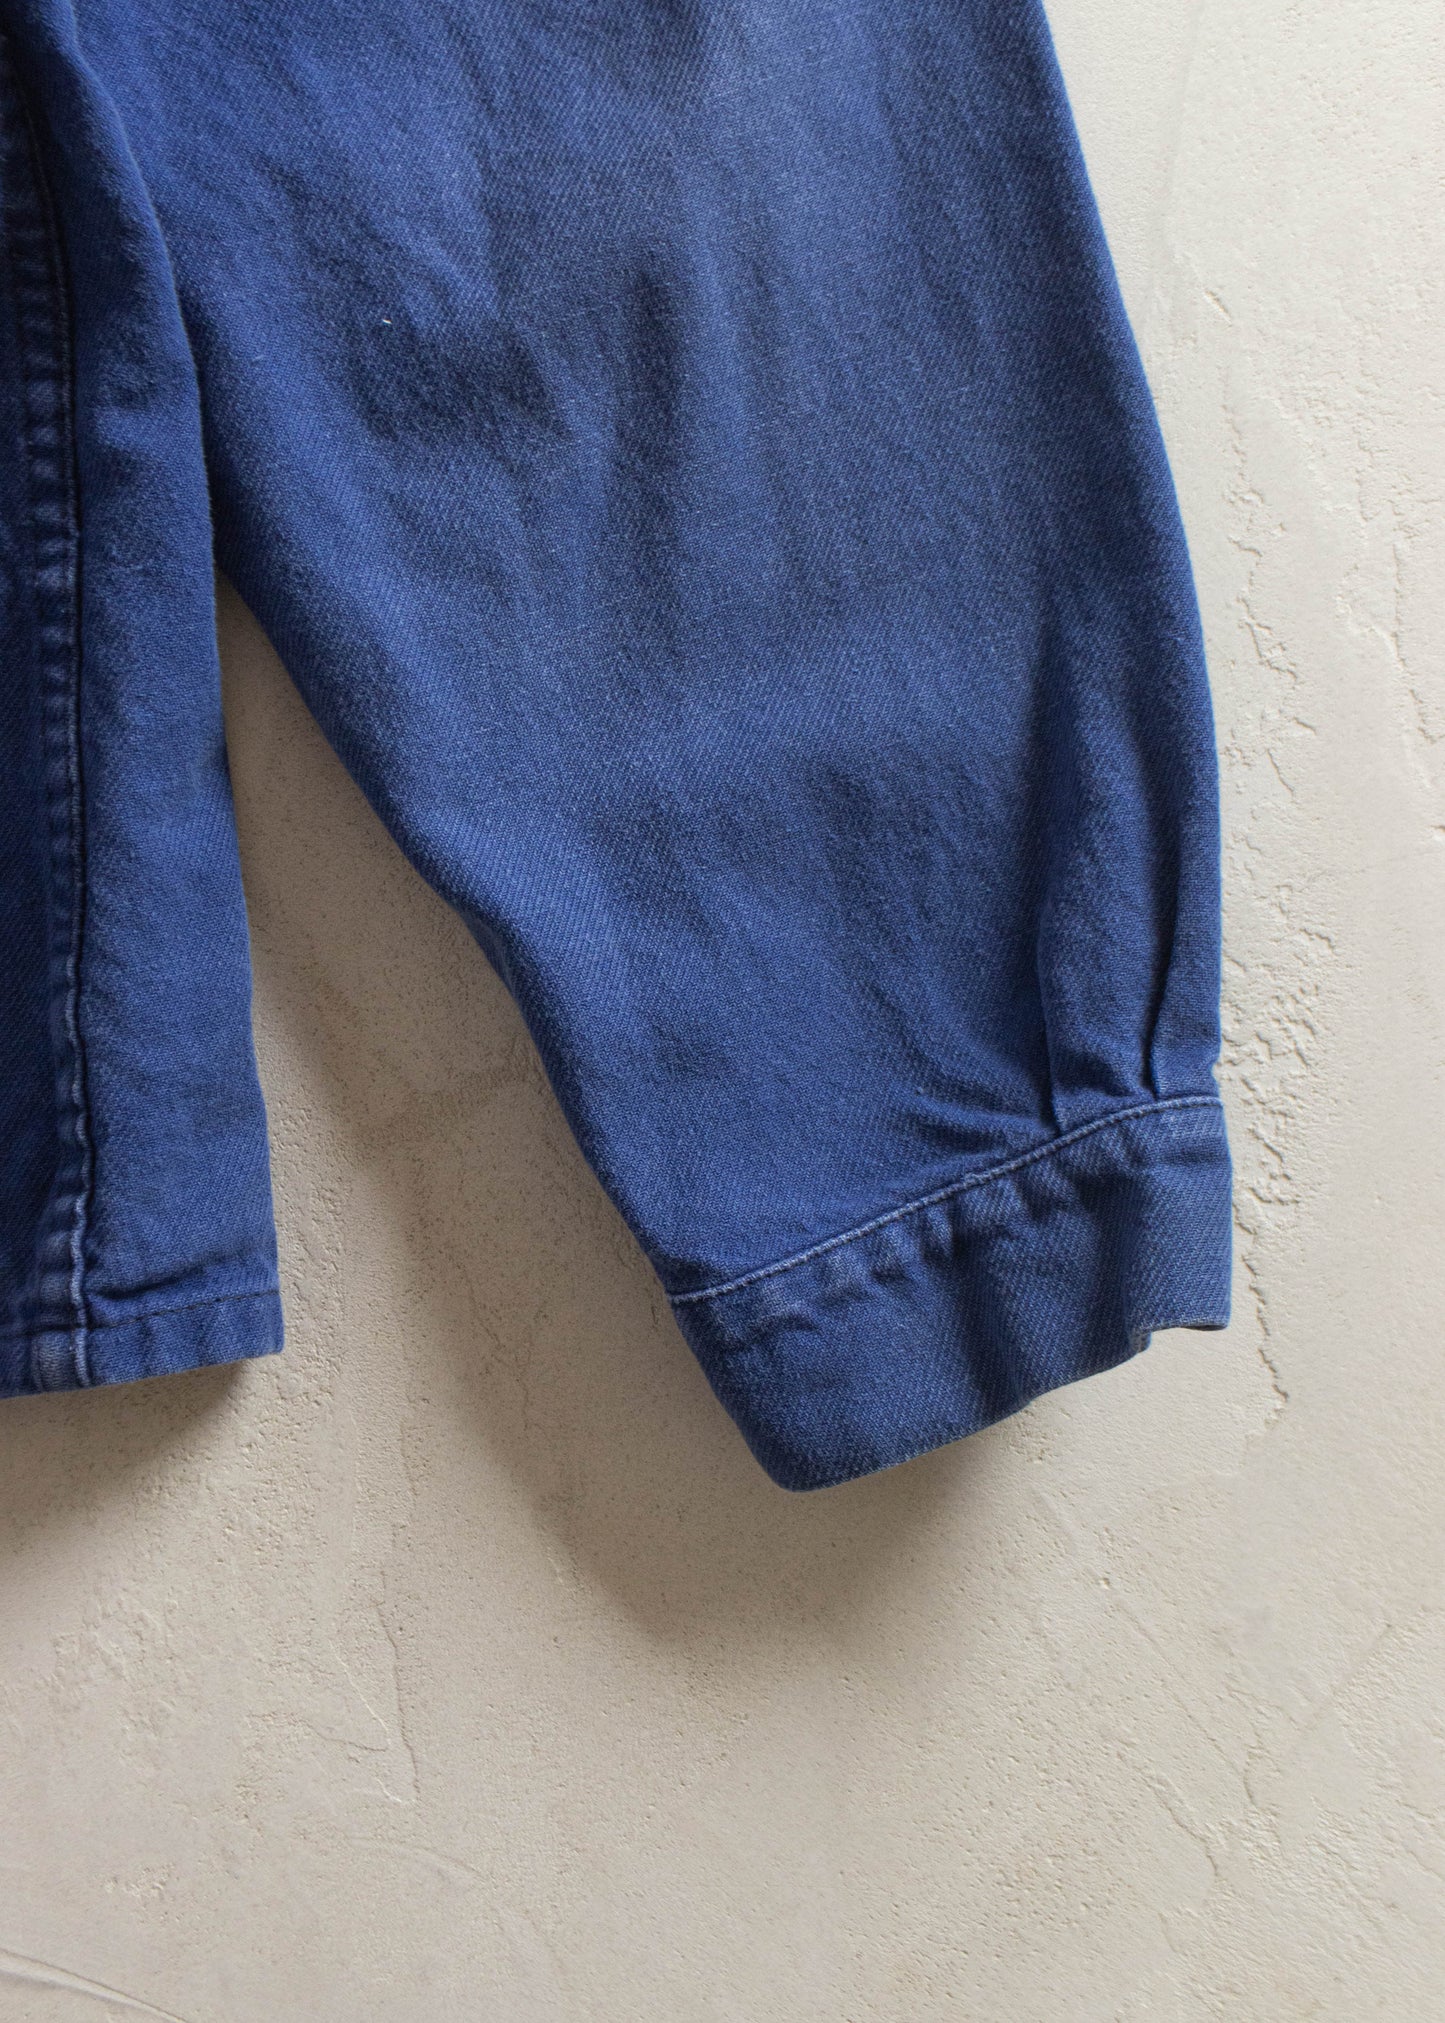 Vintage 1980s Bleu de Travail Workwear Chore Jacket Size L/XL